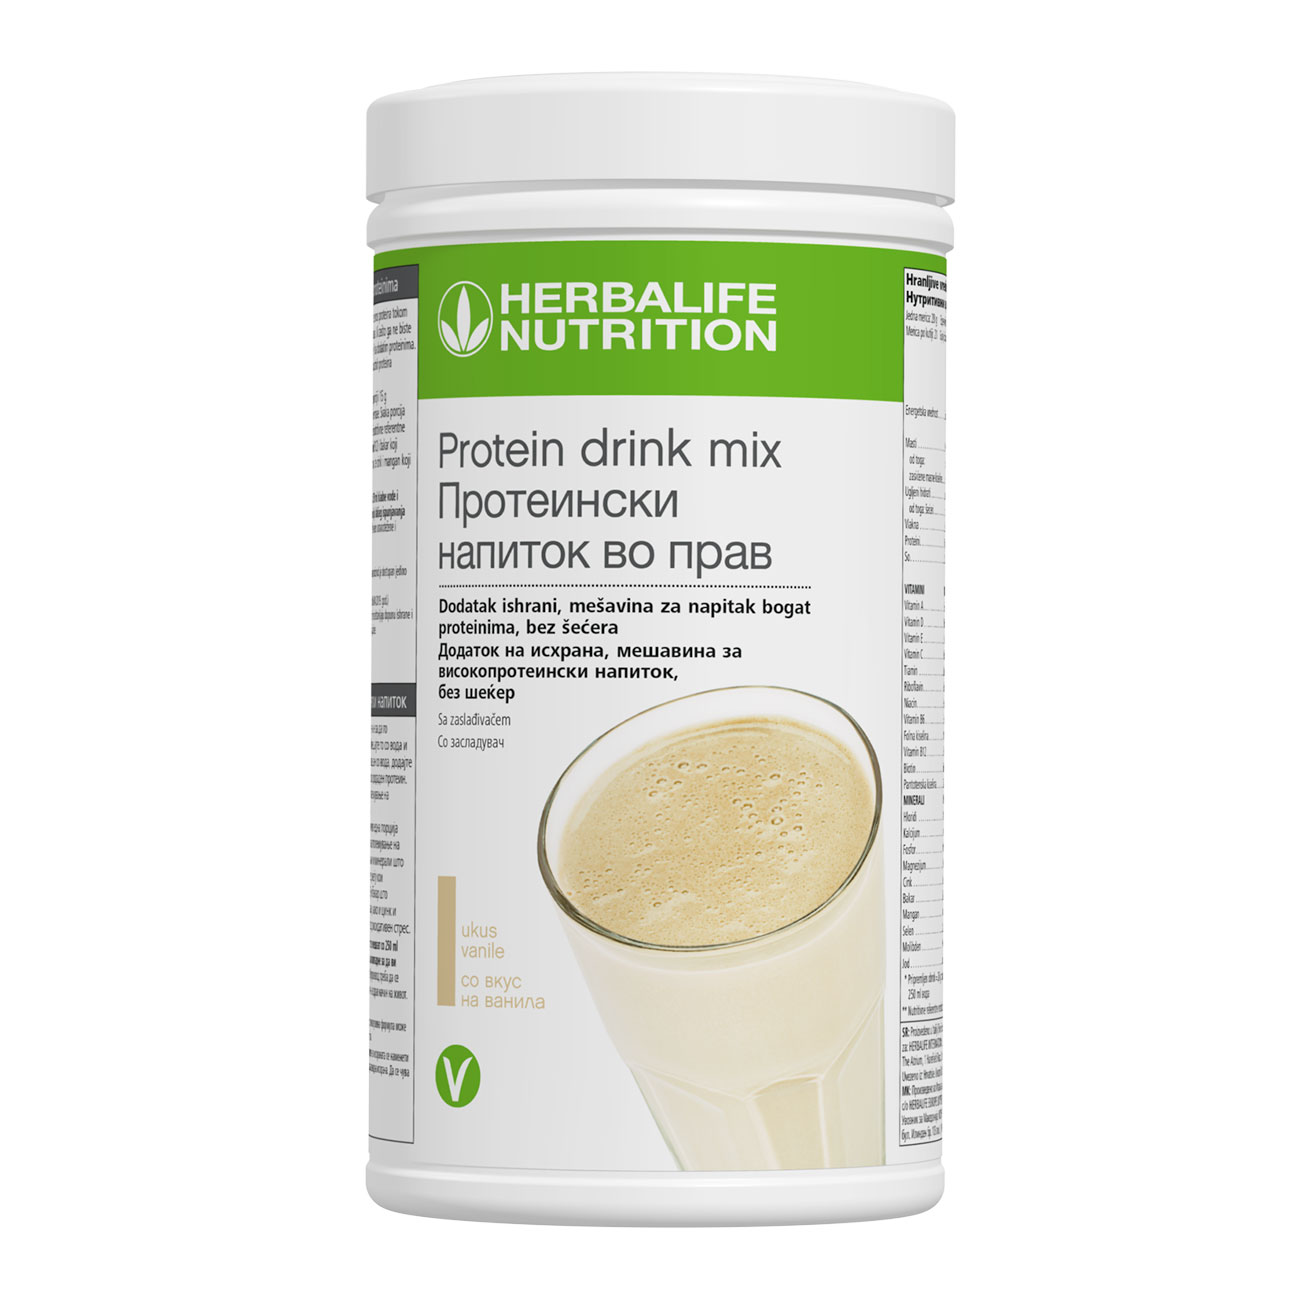 Protein drink mix Dodatak ishrani slika proizvoda.